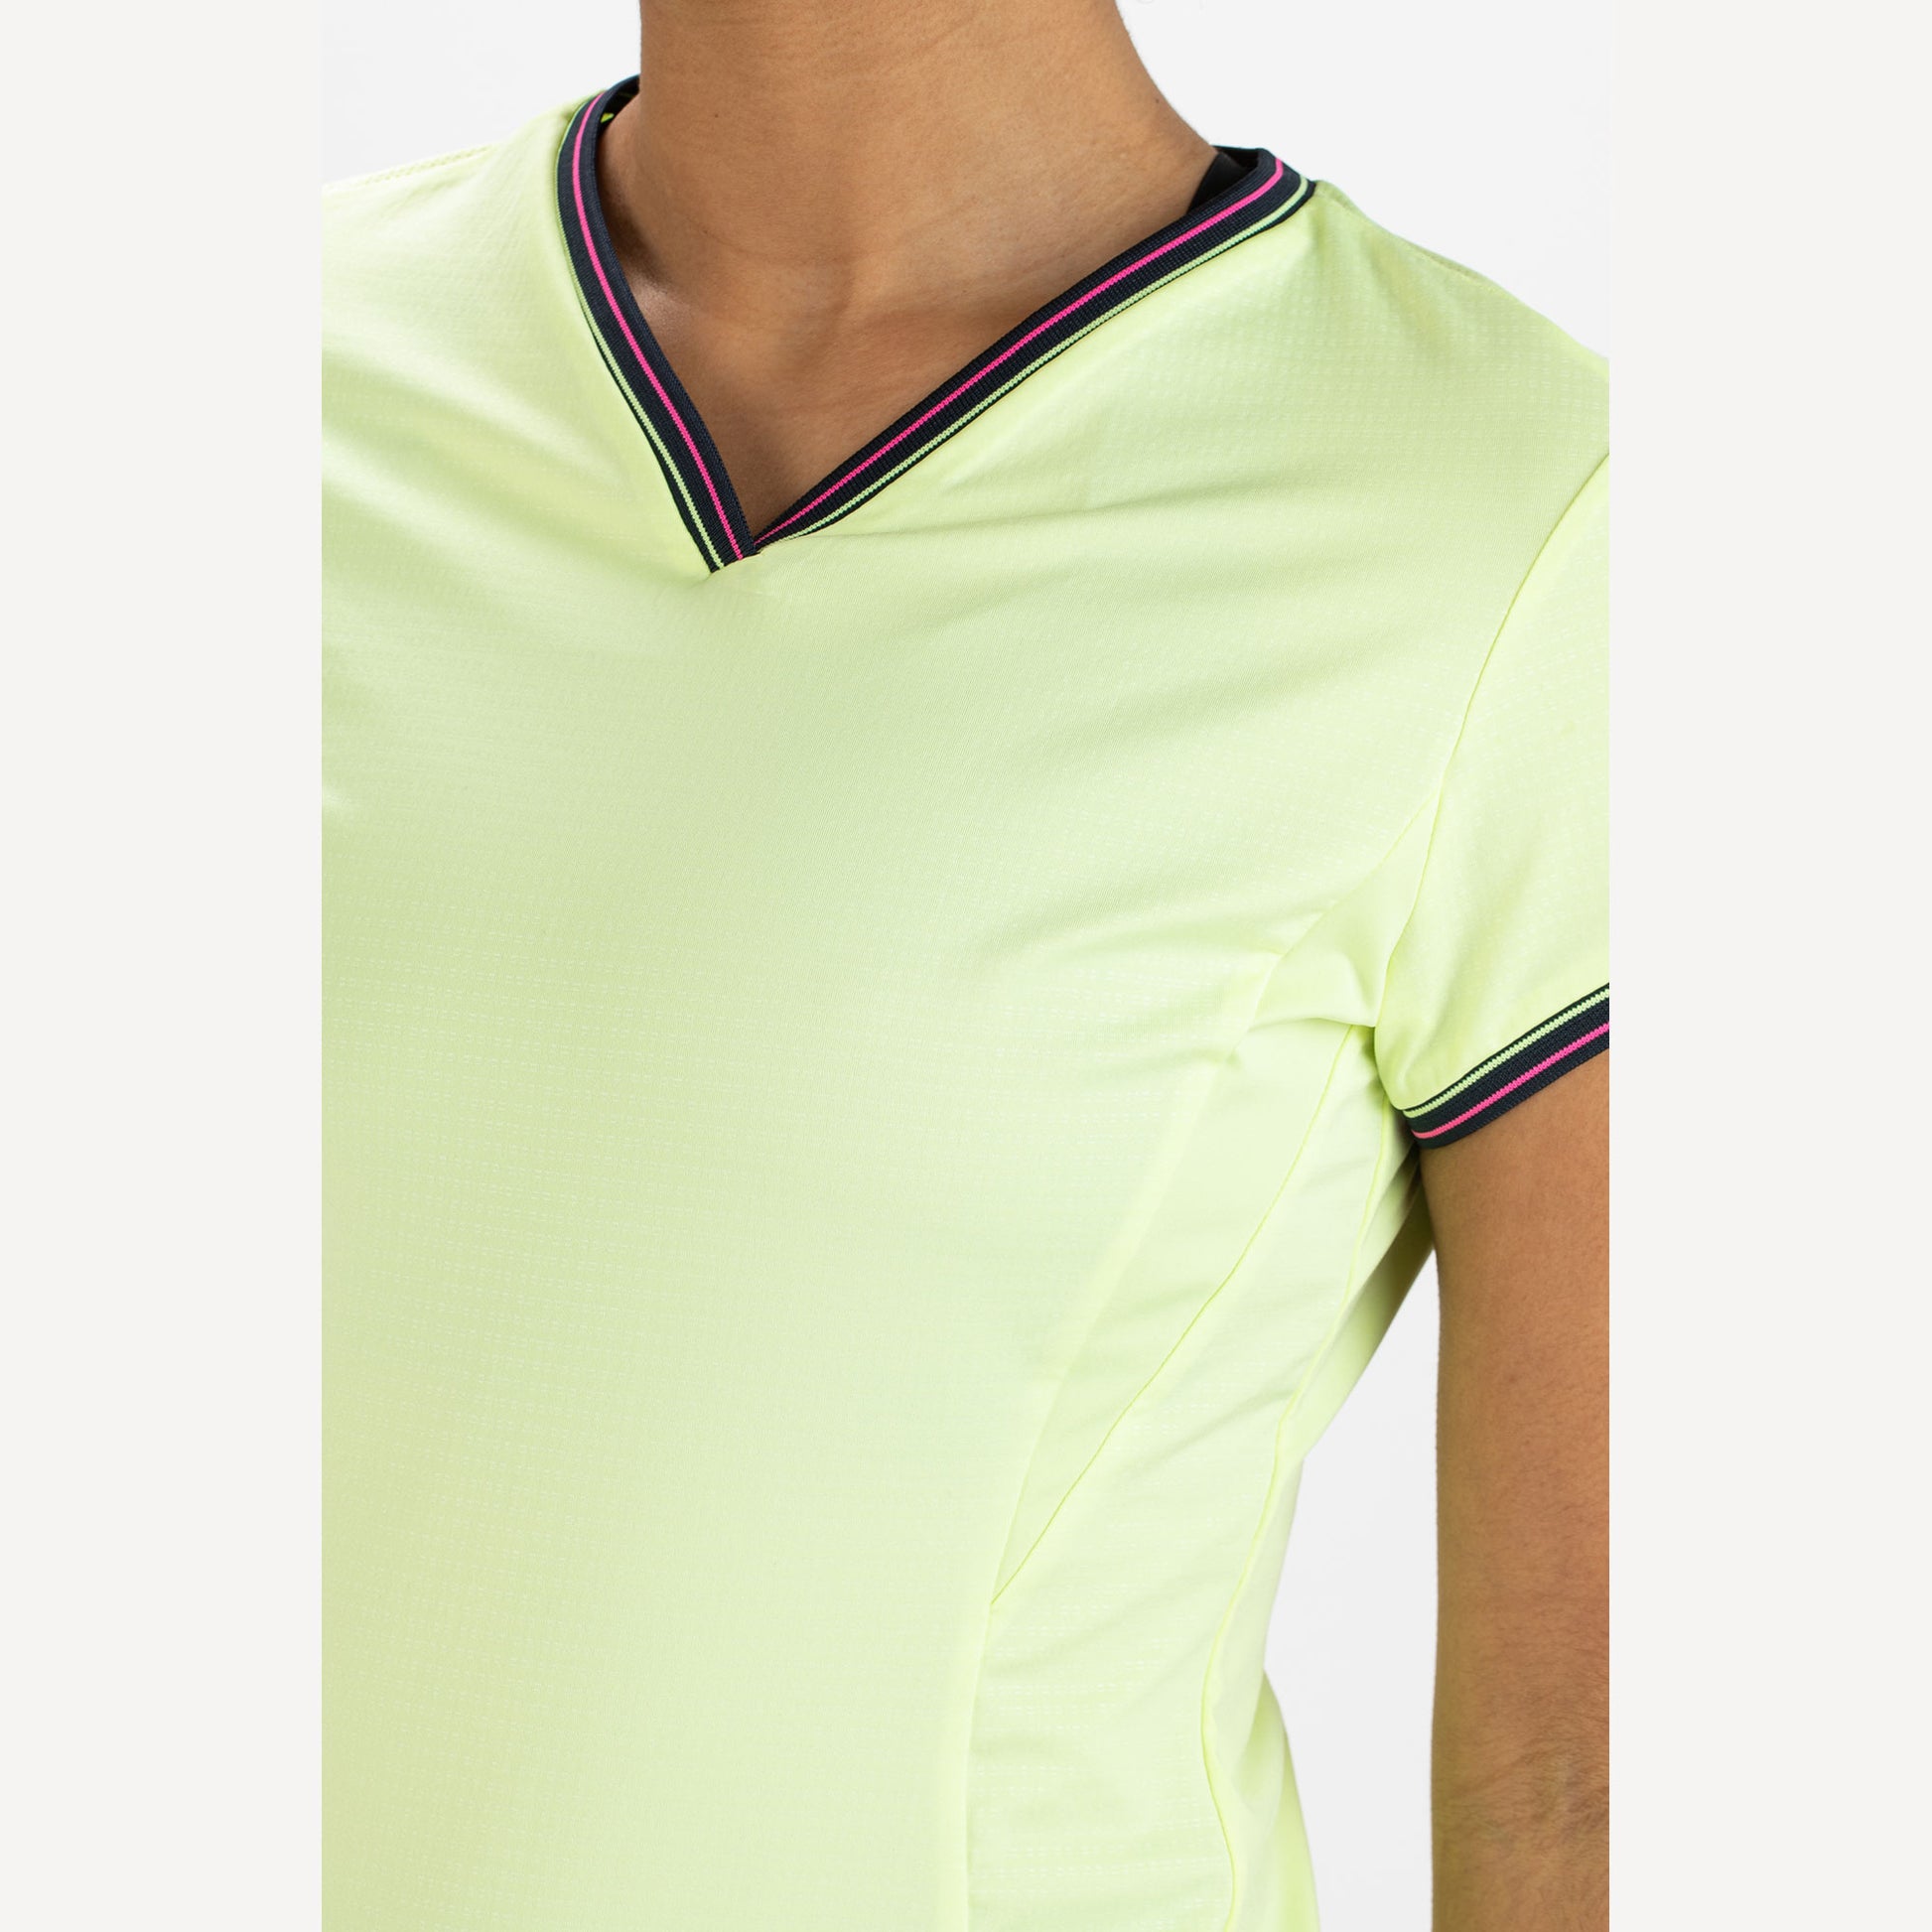 Sjeng Sports Dorothee Women's Tennis Shirt Yellow (3)